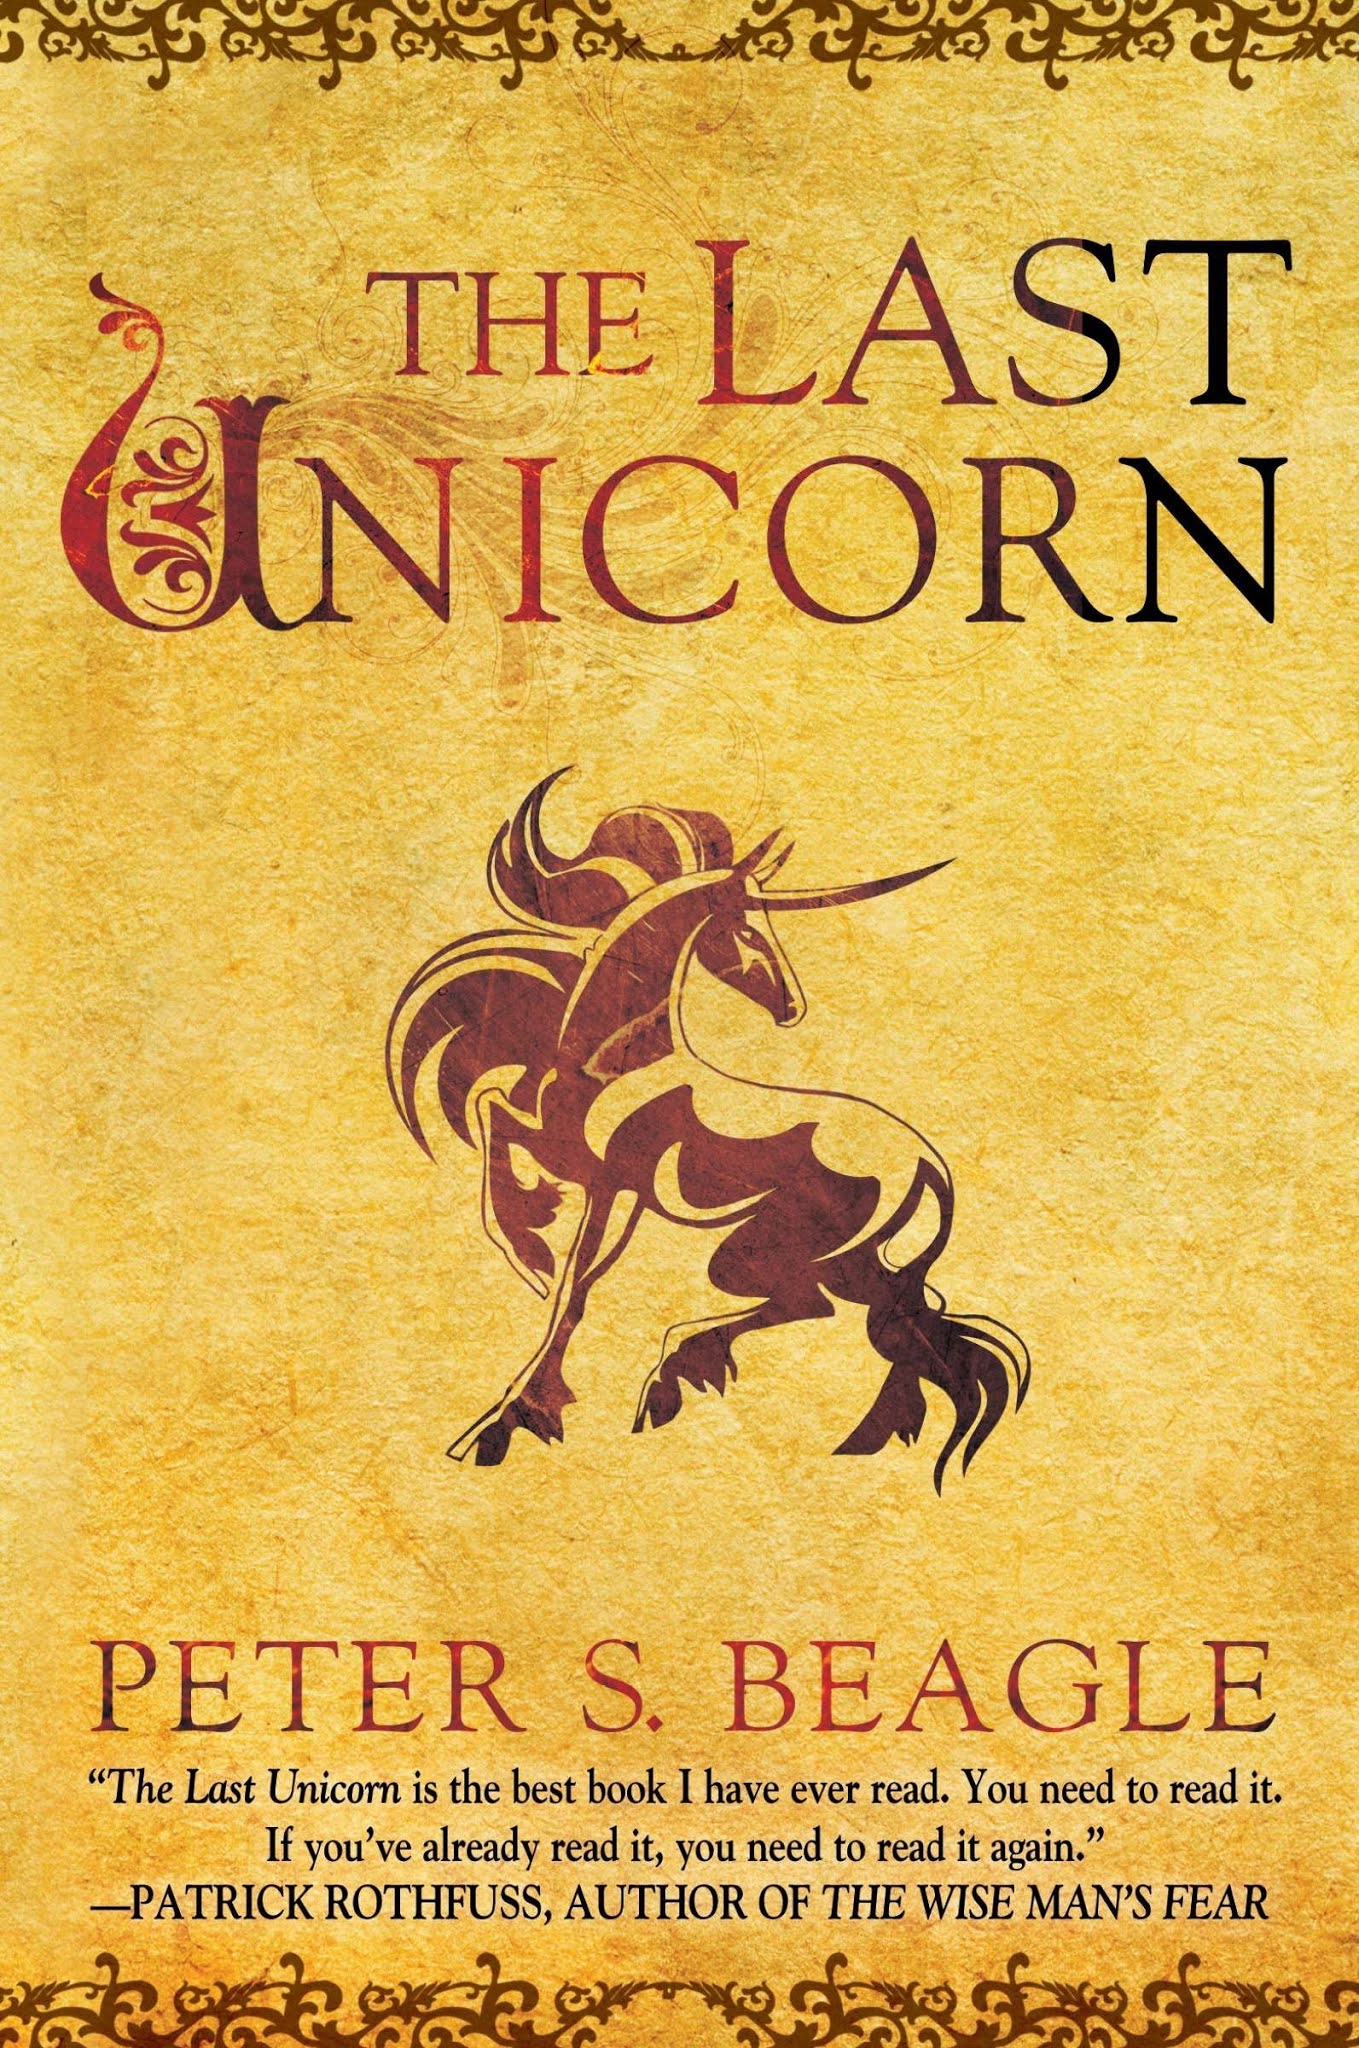 Unicorn book. Книга Единороги. Unicorn book книги. The last Unicorn book. Питер Бигл последний Единорог.